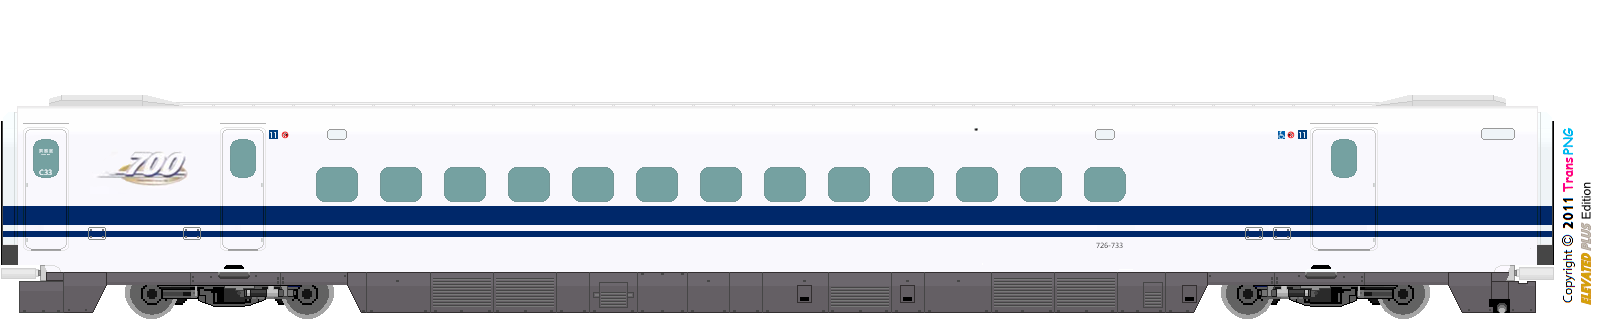 [9010] Central Japan Railway 52287846304_aea3ba819e_o